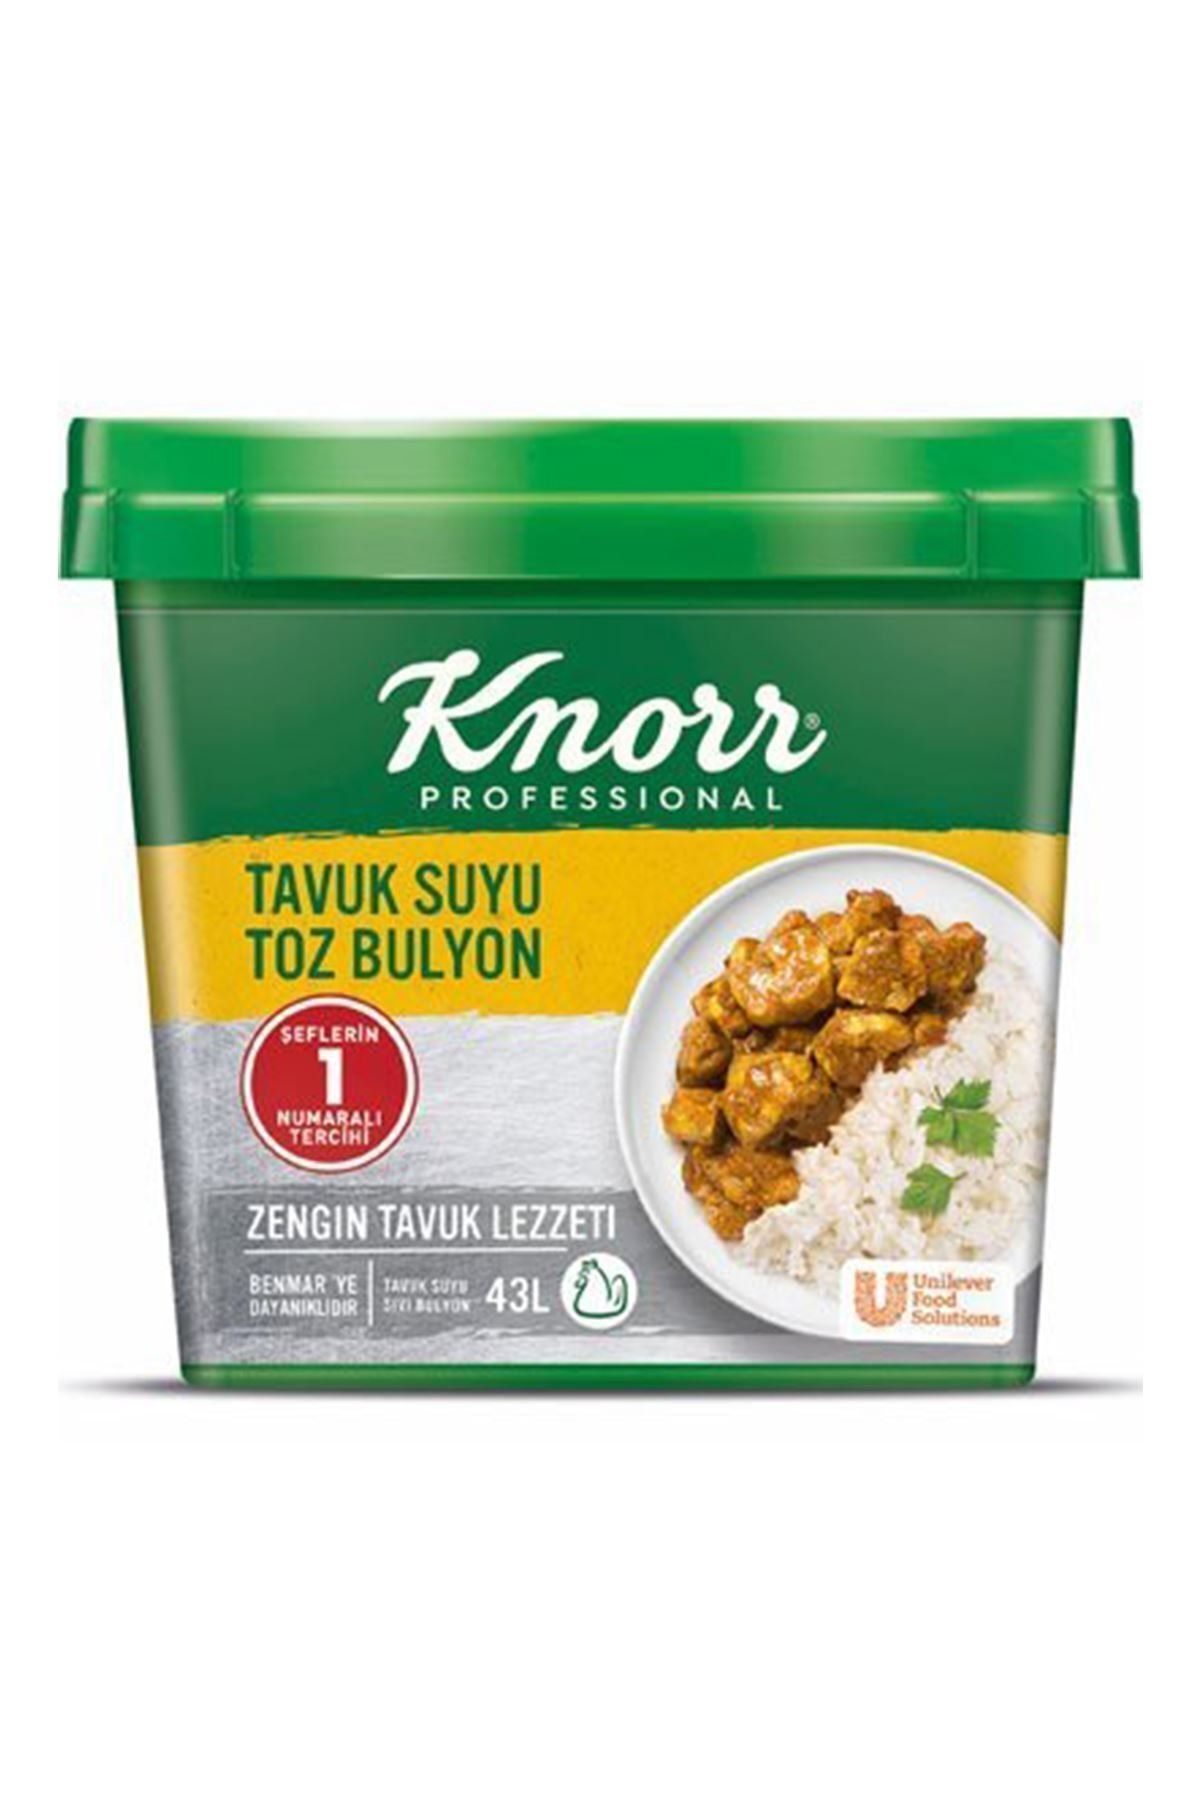 Knorr Tavuk Suyu Toz Bulyon 750 G